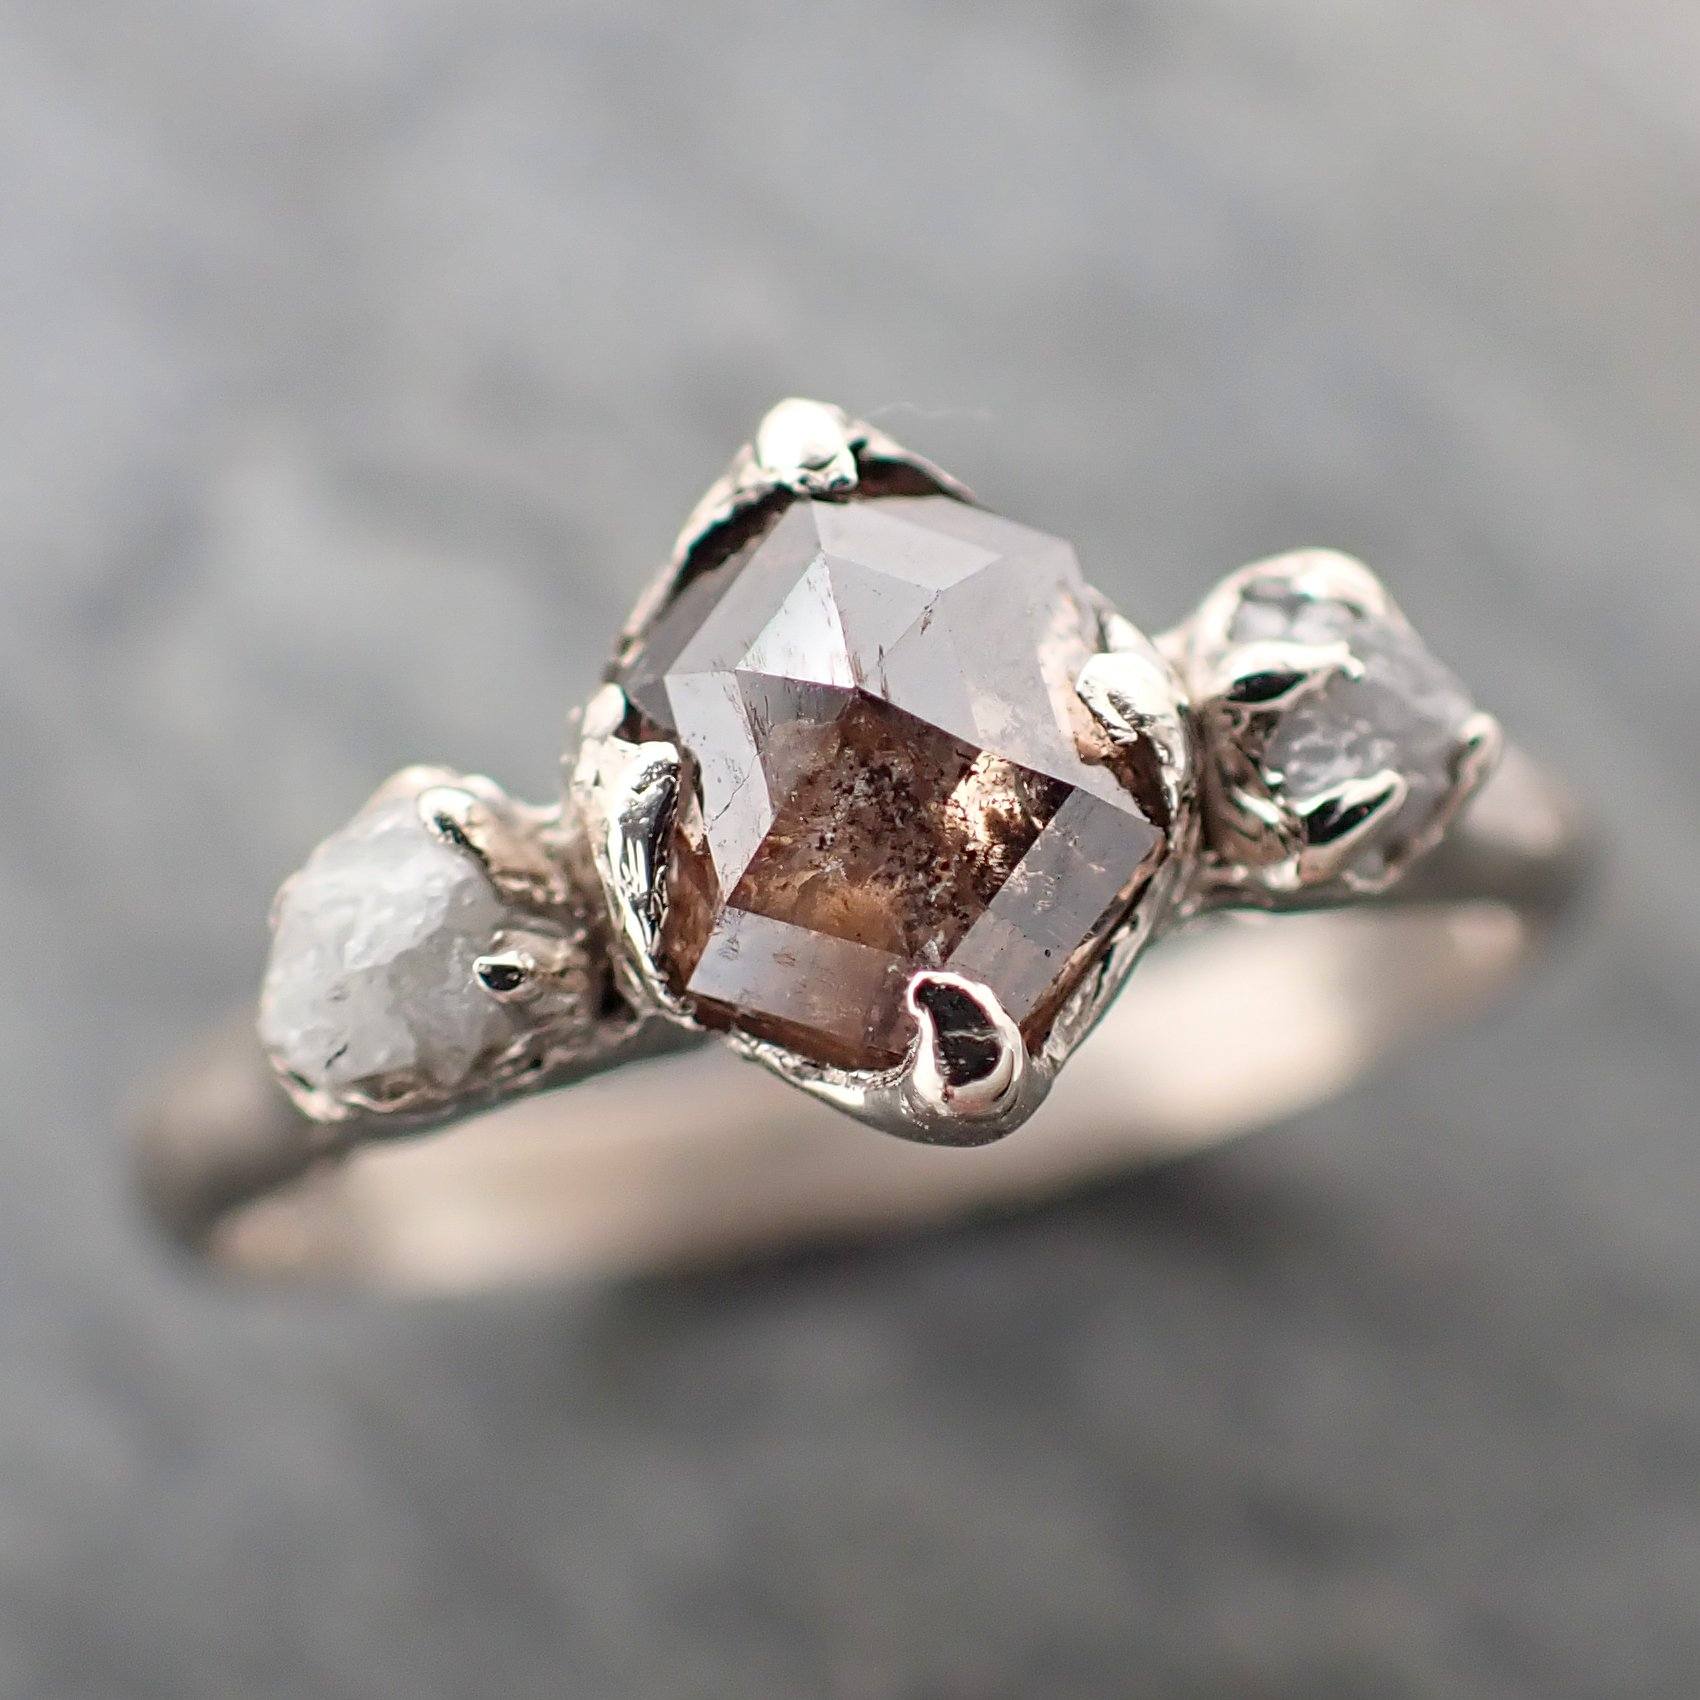 fancy cut salt and pepper diamond multi stone engagement 14k white gold wedding ring rough diamond ring byangeline 2277 Alternative Engagement